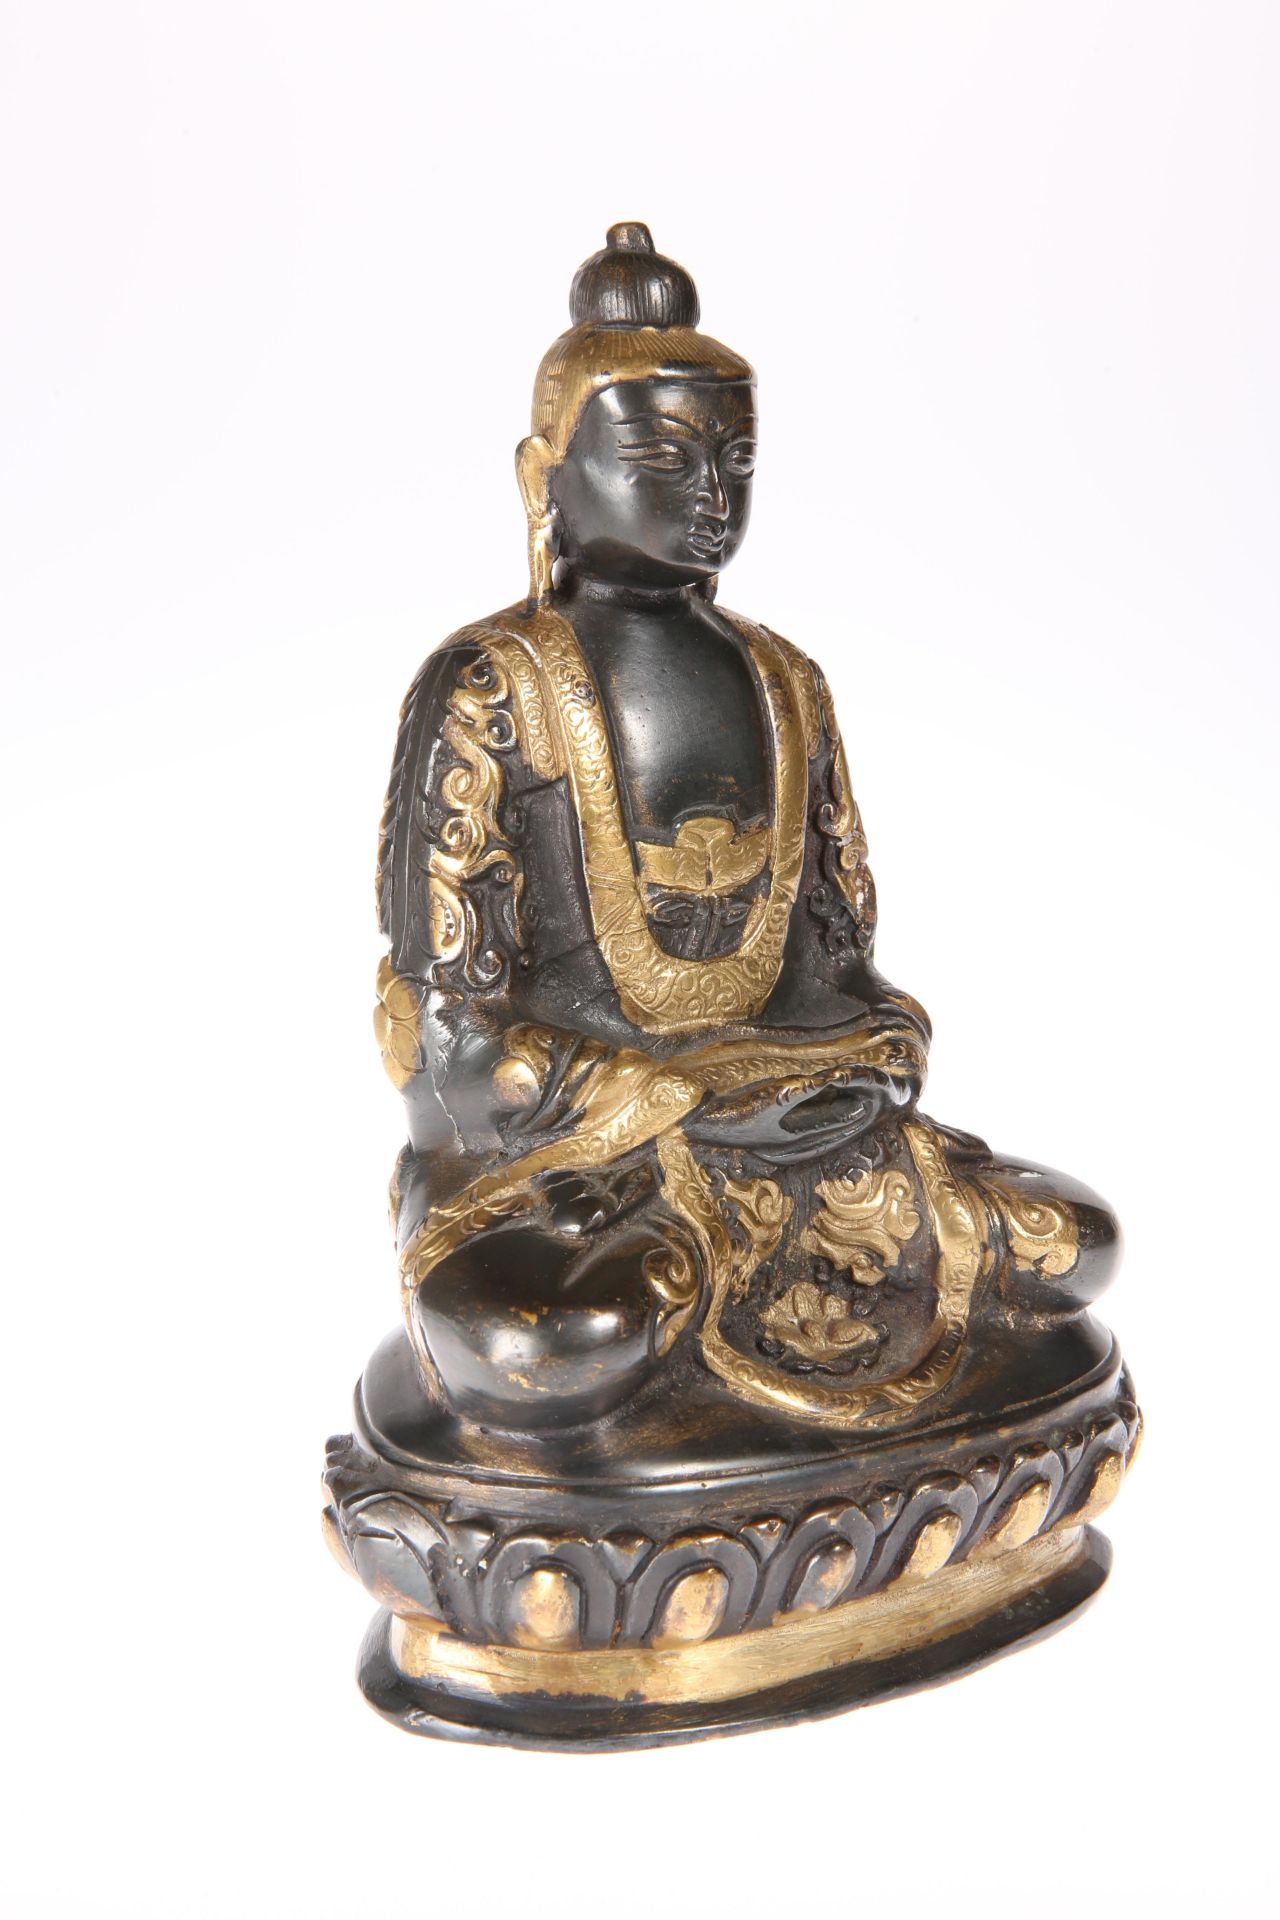 A CHINESE BRONZE FIGURE OF BUDDHA SHAKYAMUNI, 19TH CENTURY, modelled seated, partially gilded. 19.